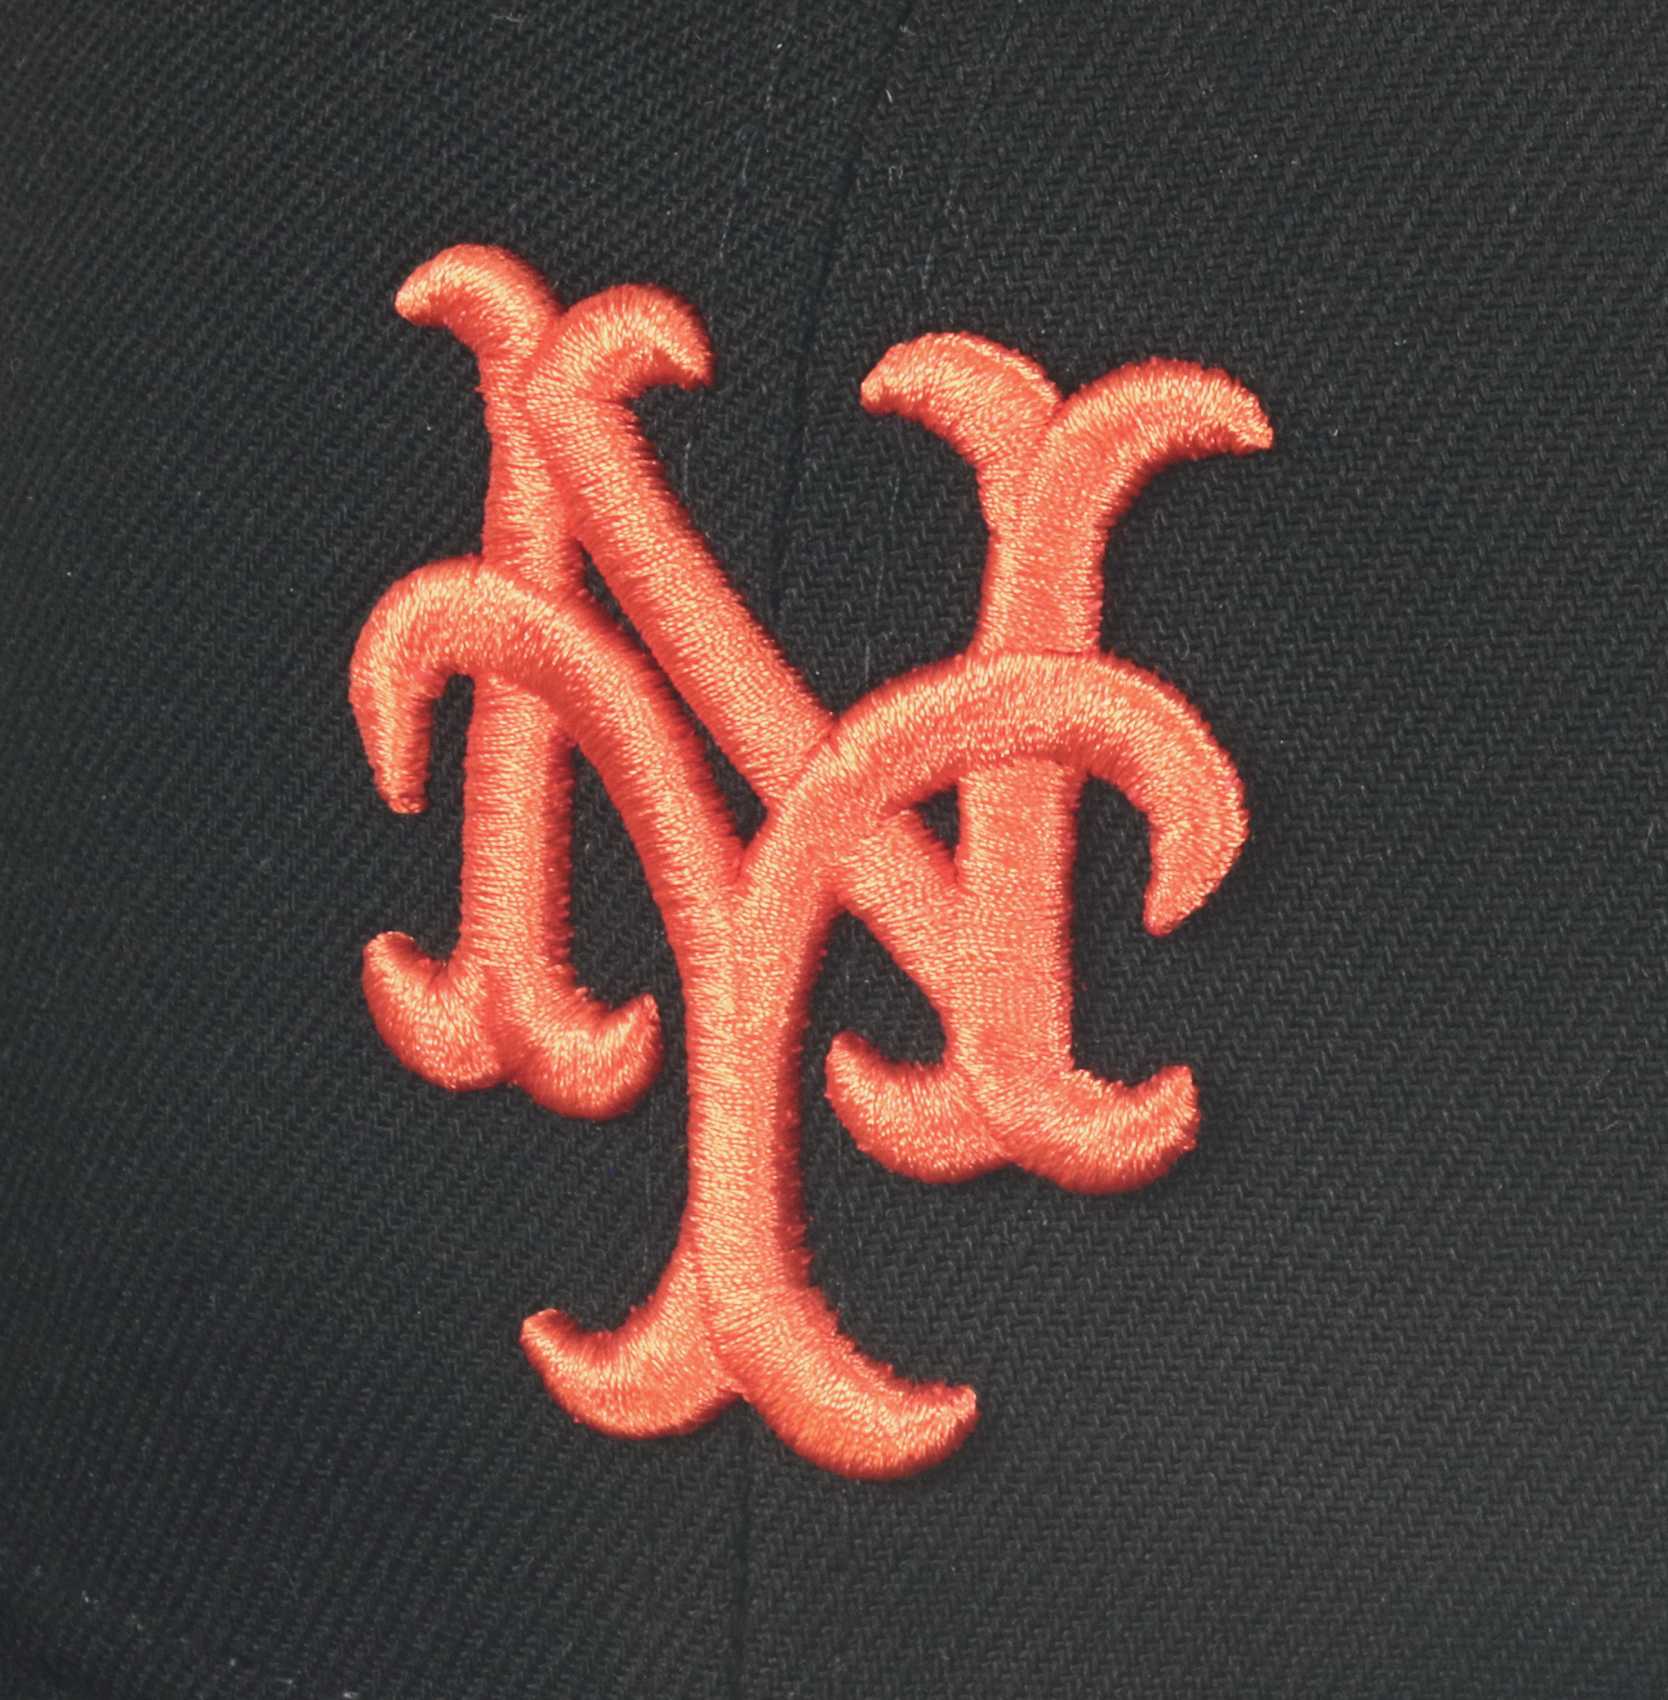 New York Mets Black Base 59Fifty Basecap New Era